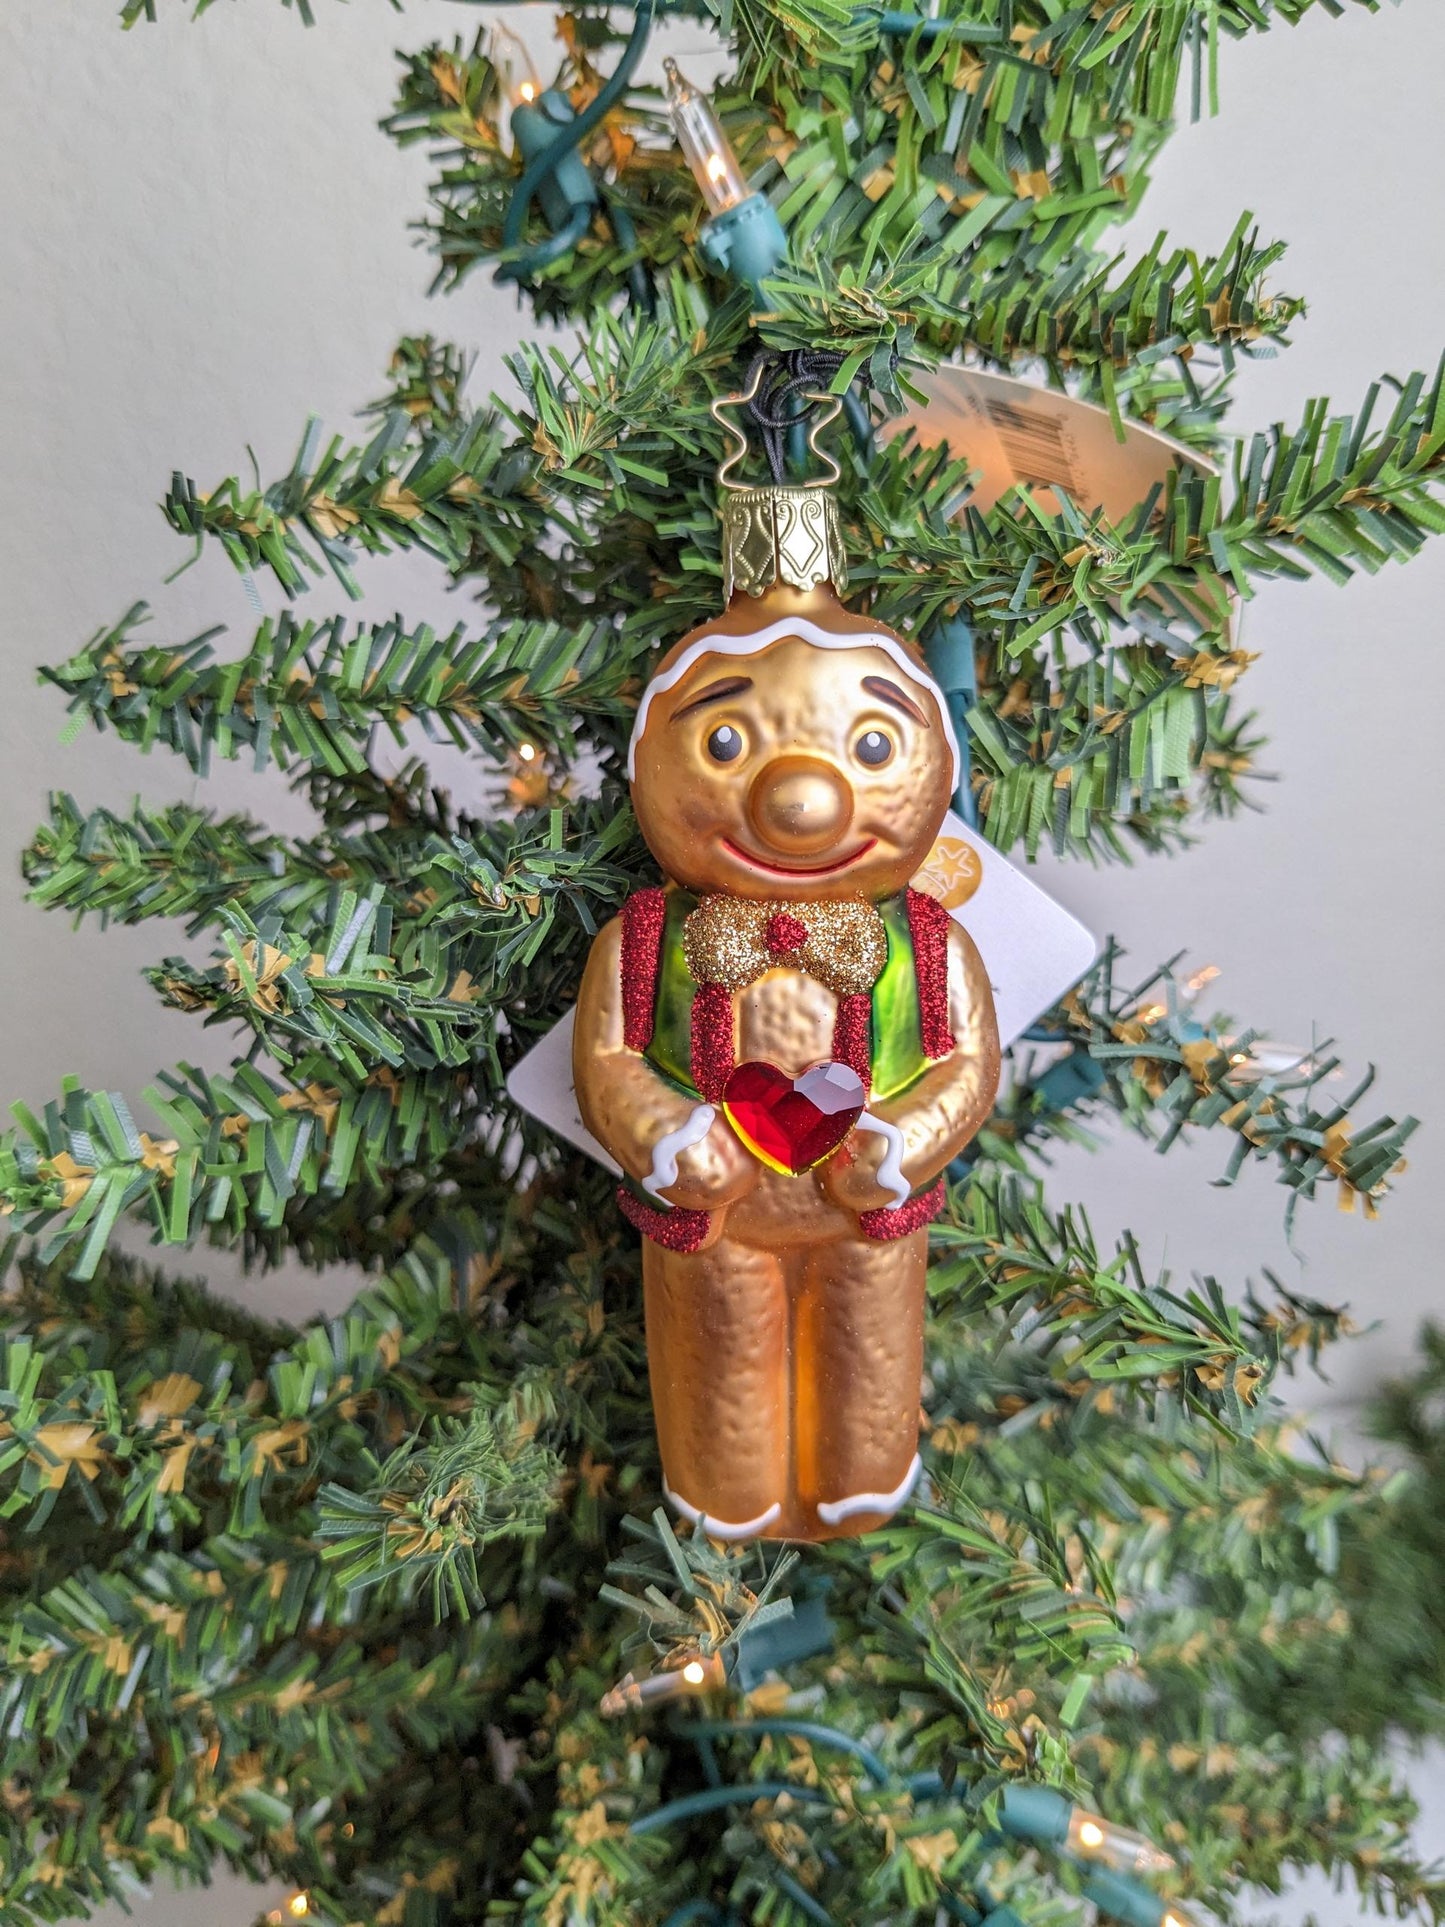 NEW 'Sweet Christmas' Gingerbread Man Inge Glas Christmas Ornament